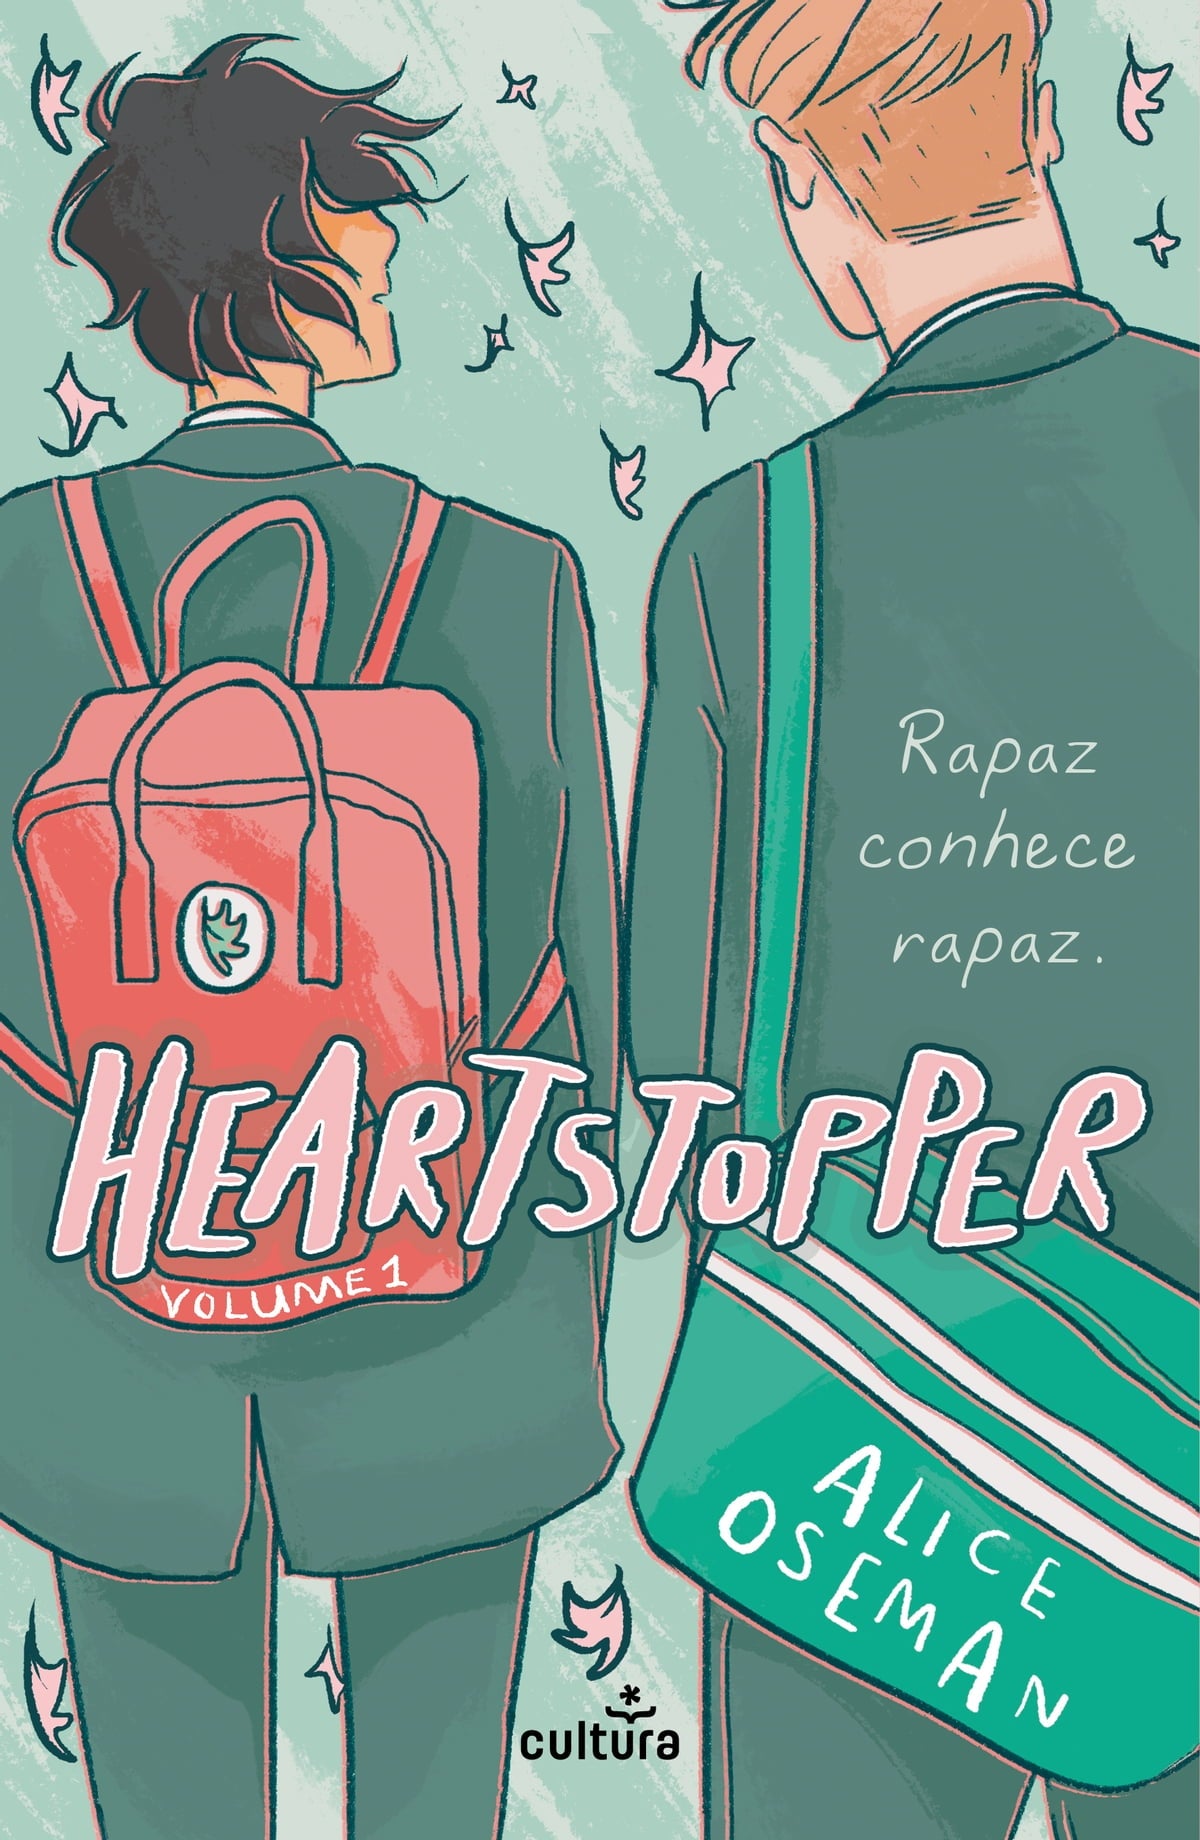 Heartstopper: Volume 1 Rapaz conhece rapaz de Alice Oseman